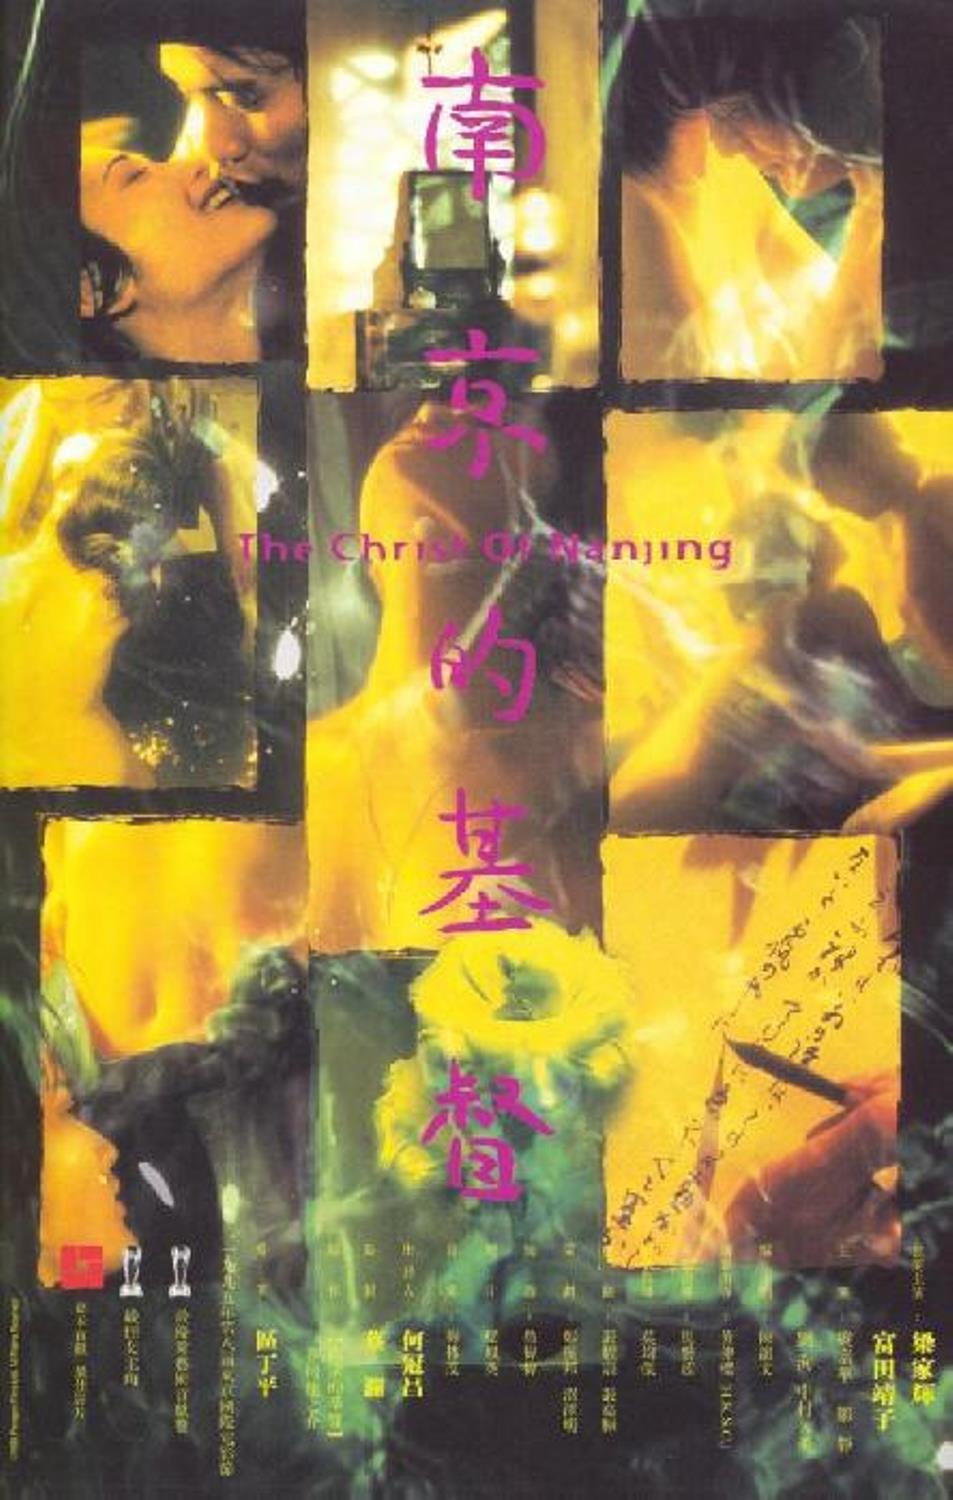 affiche du film The Christ of Nanjing